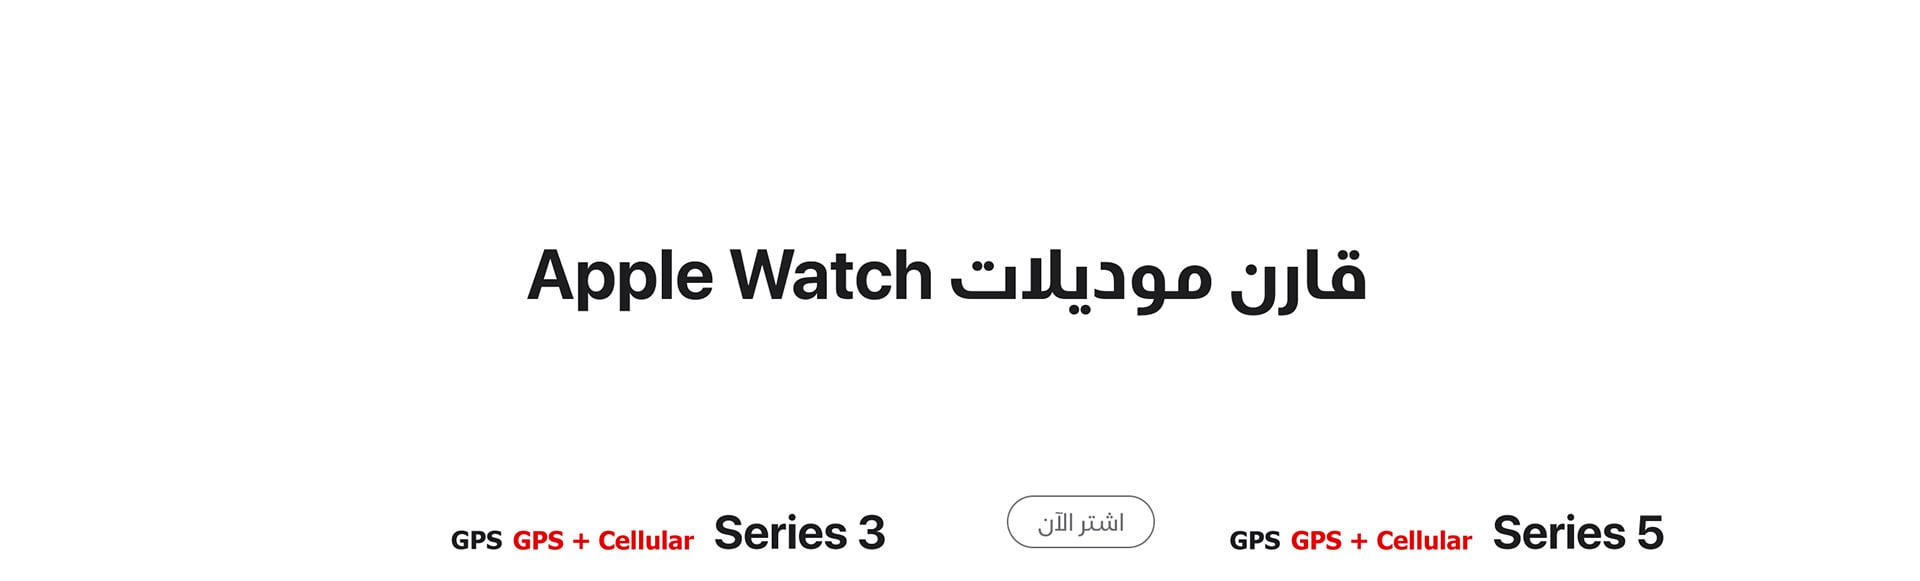 apple-watch-series5-price-etisalat-uae-comparison-1-ar